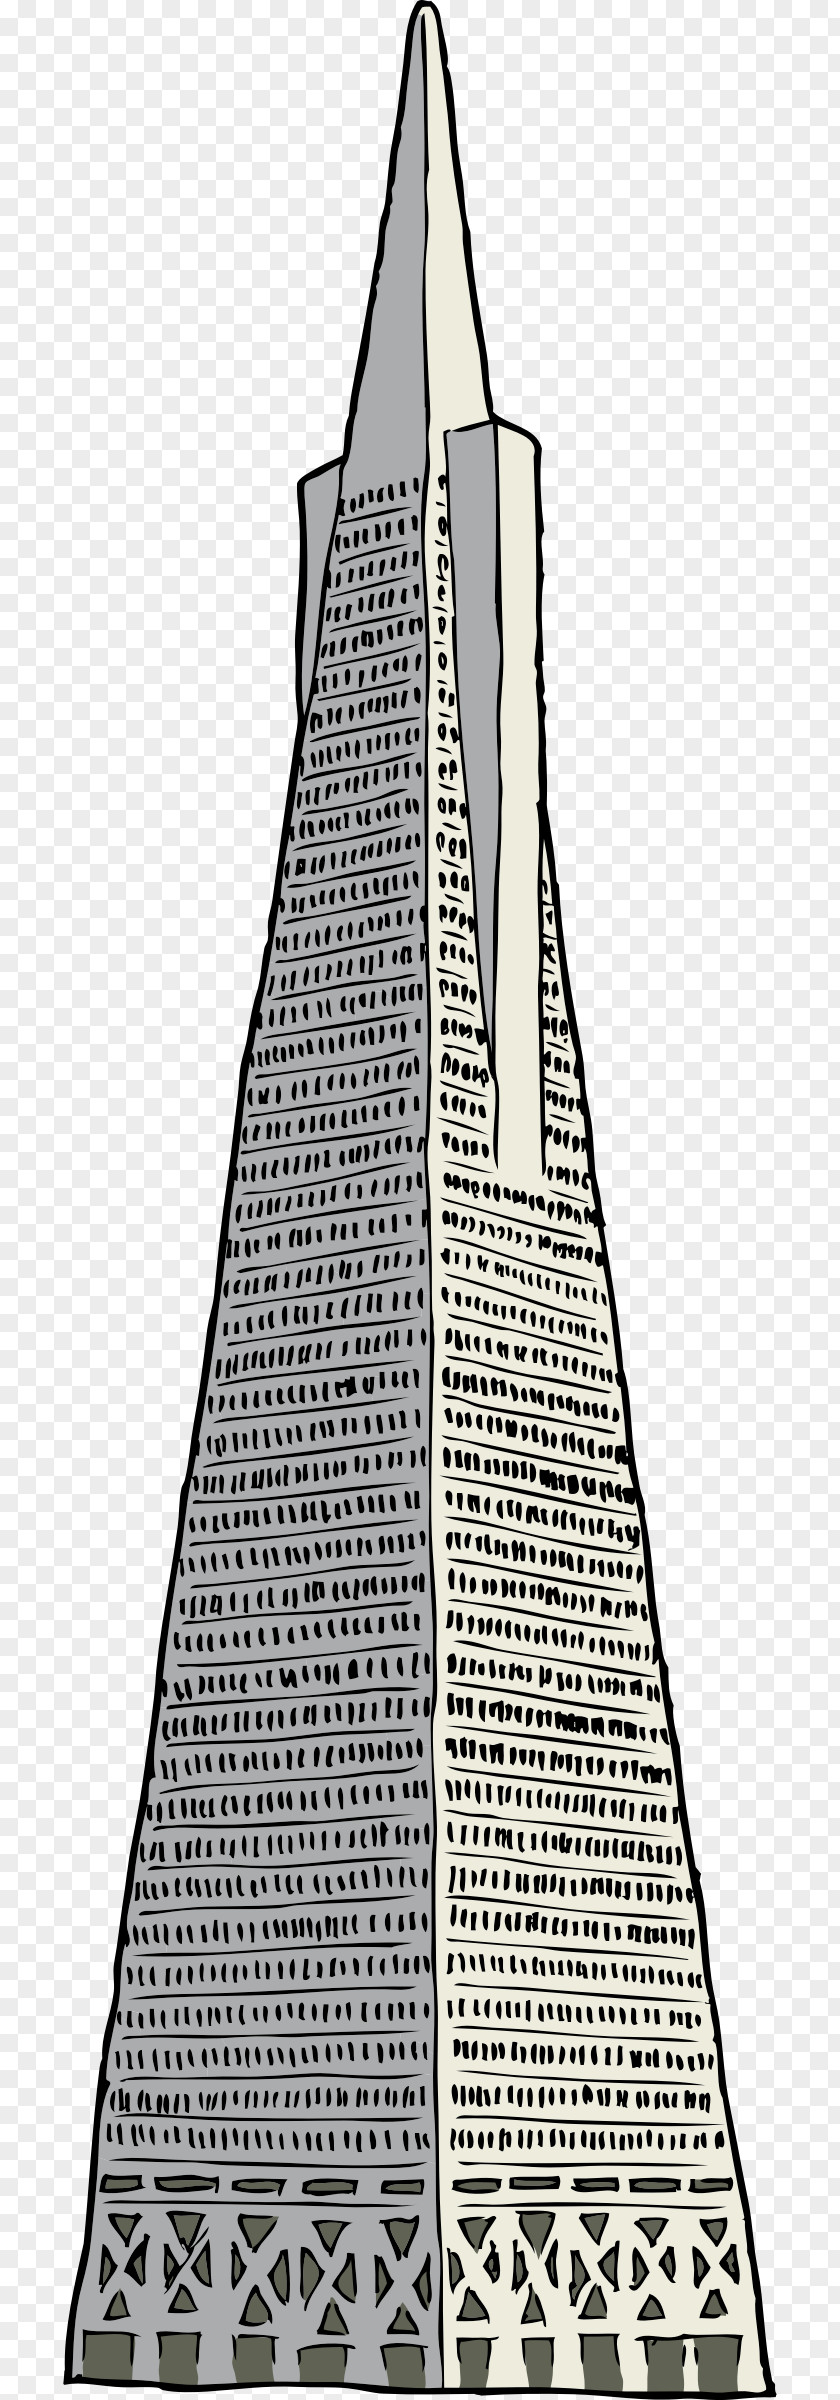 Skyscraper Transamerica Pyramid Coit Tower Building Clip Art PNG